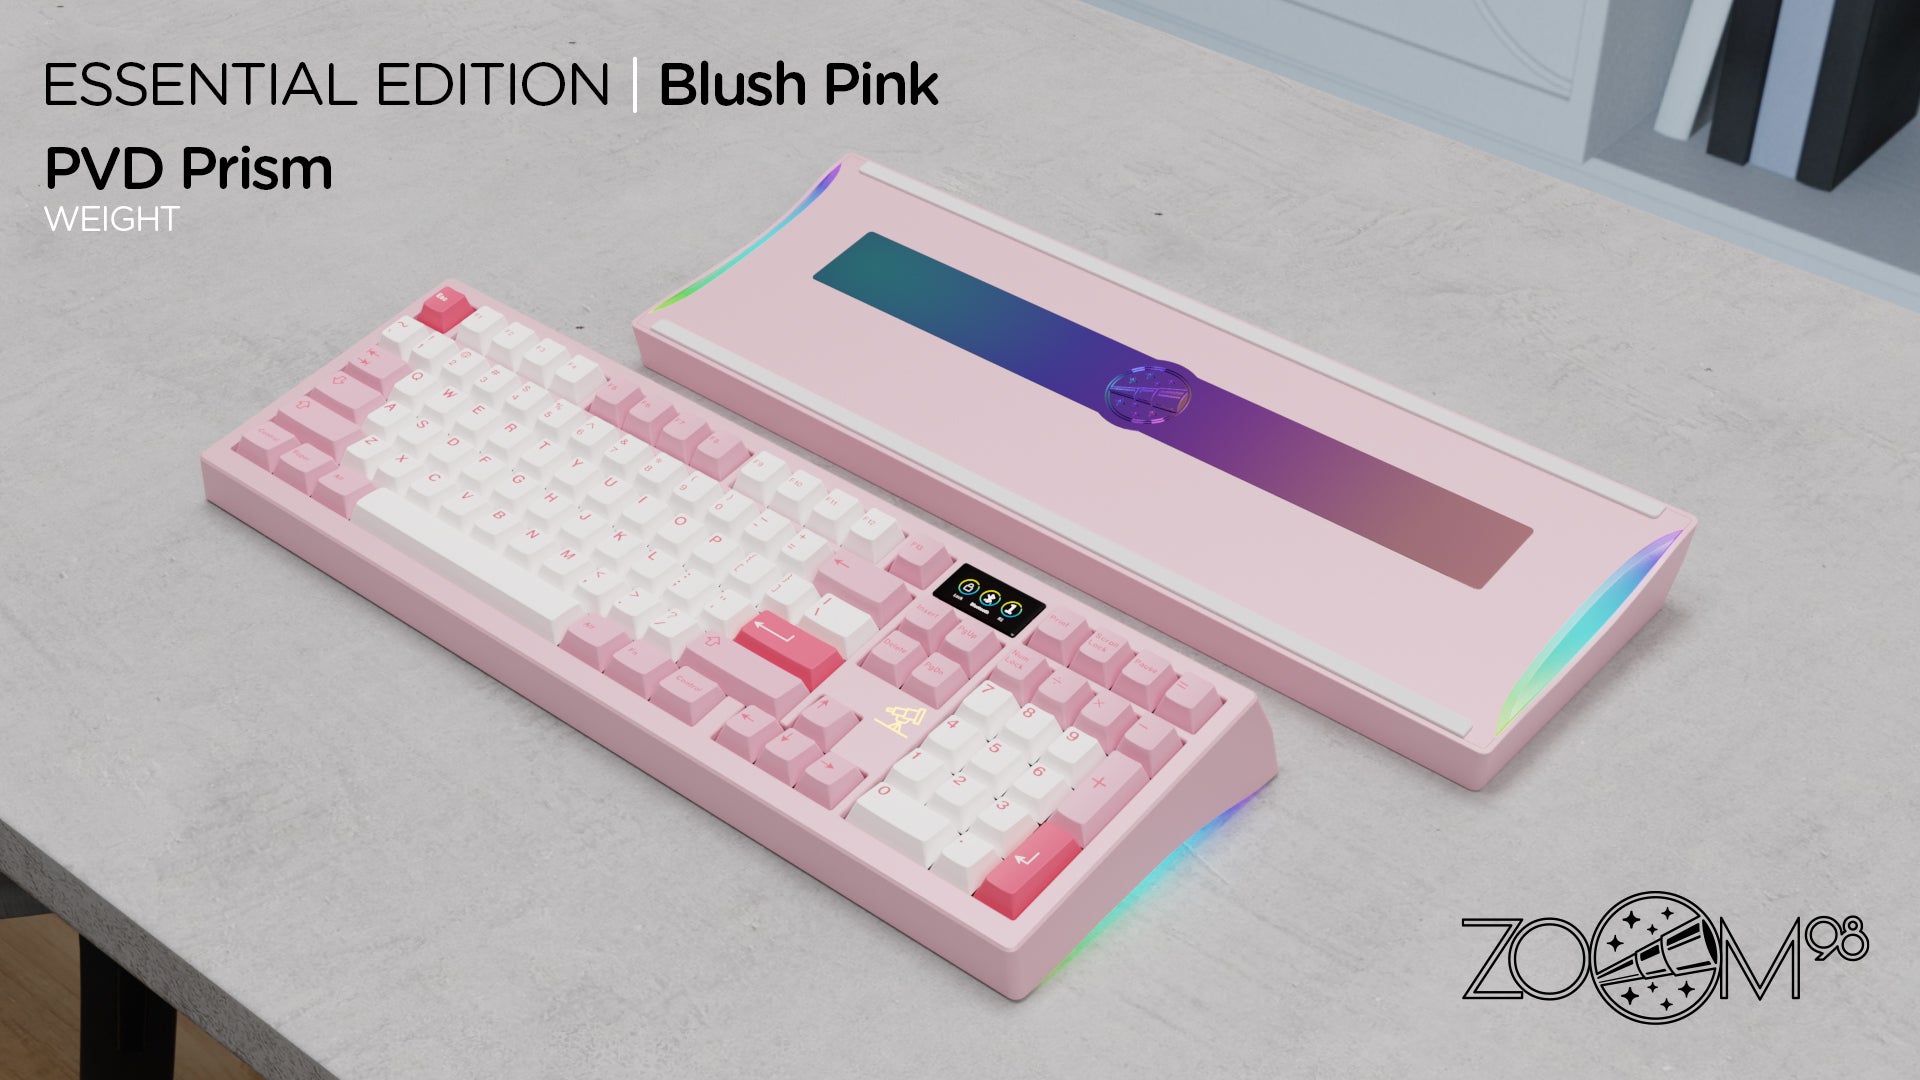 Zoom98 EE Blush Pink